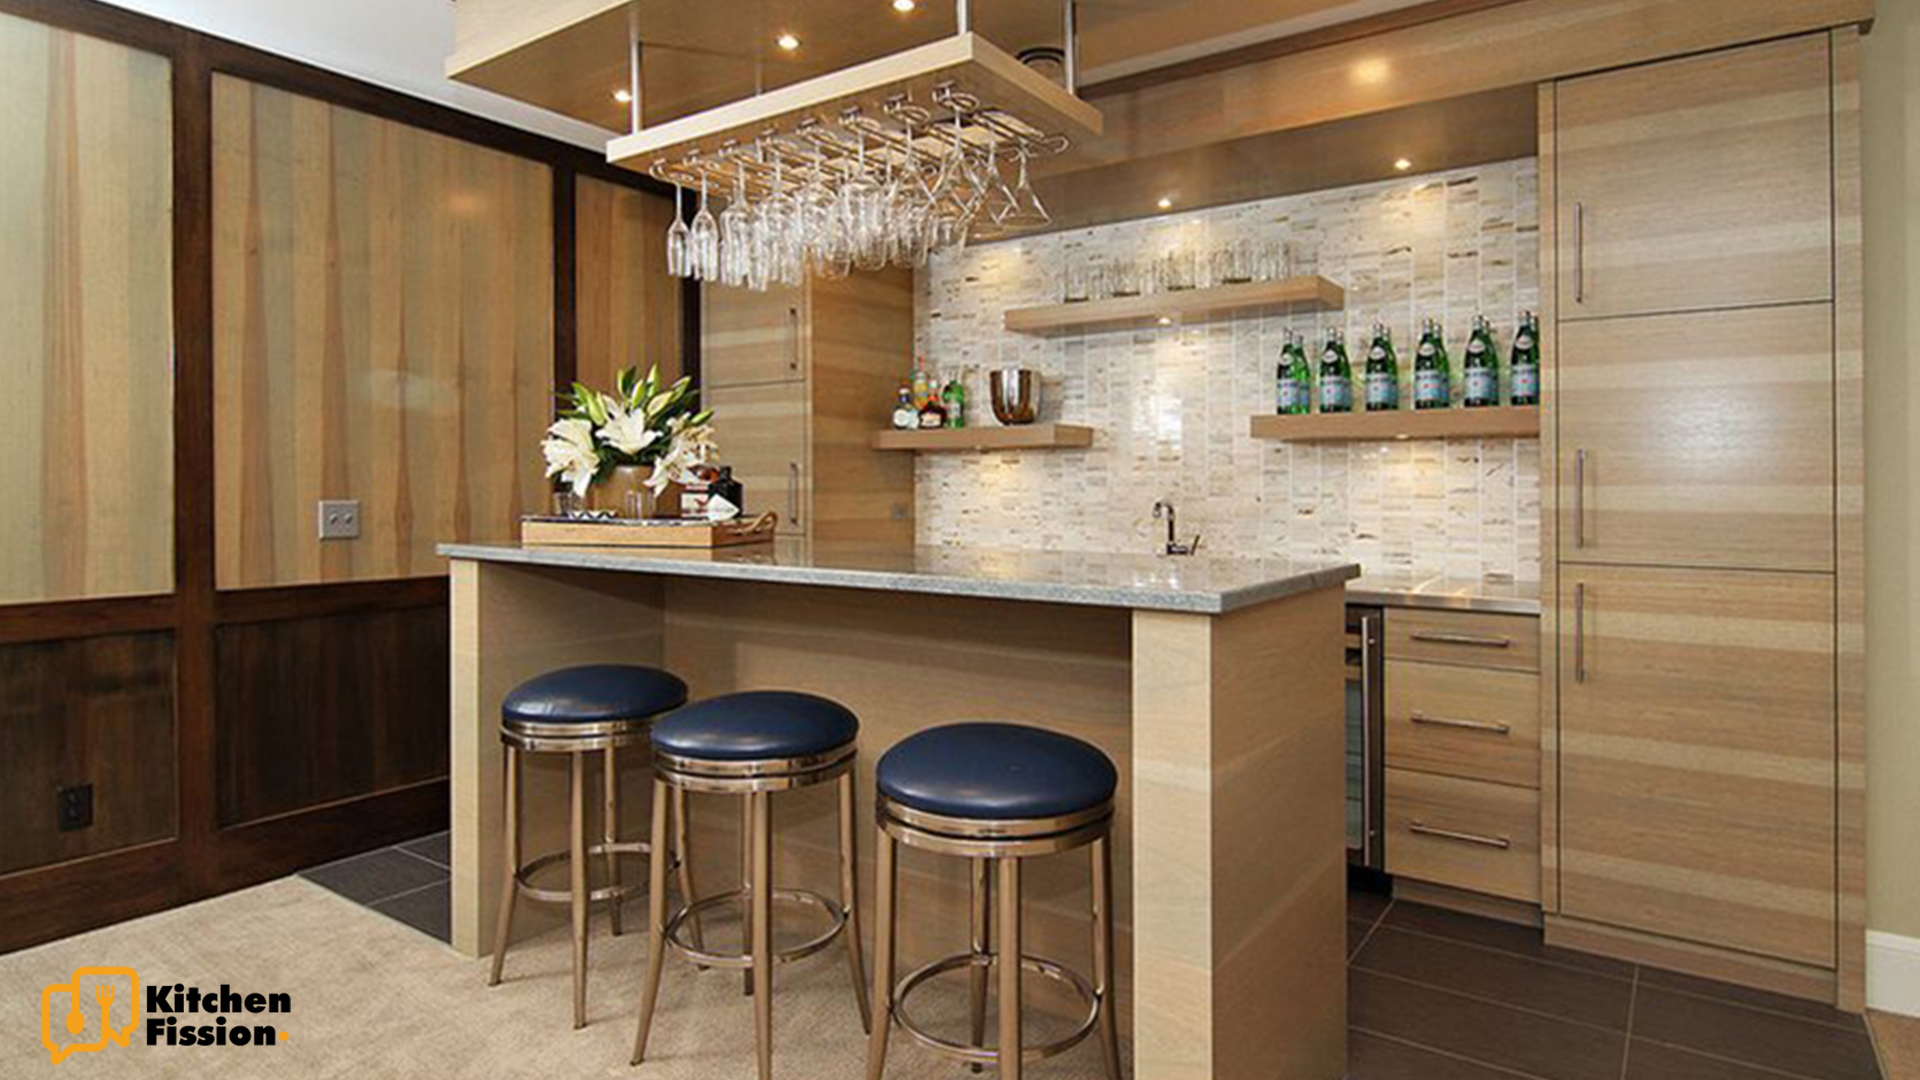 Home Styles Americana Bar Cabinet